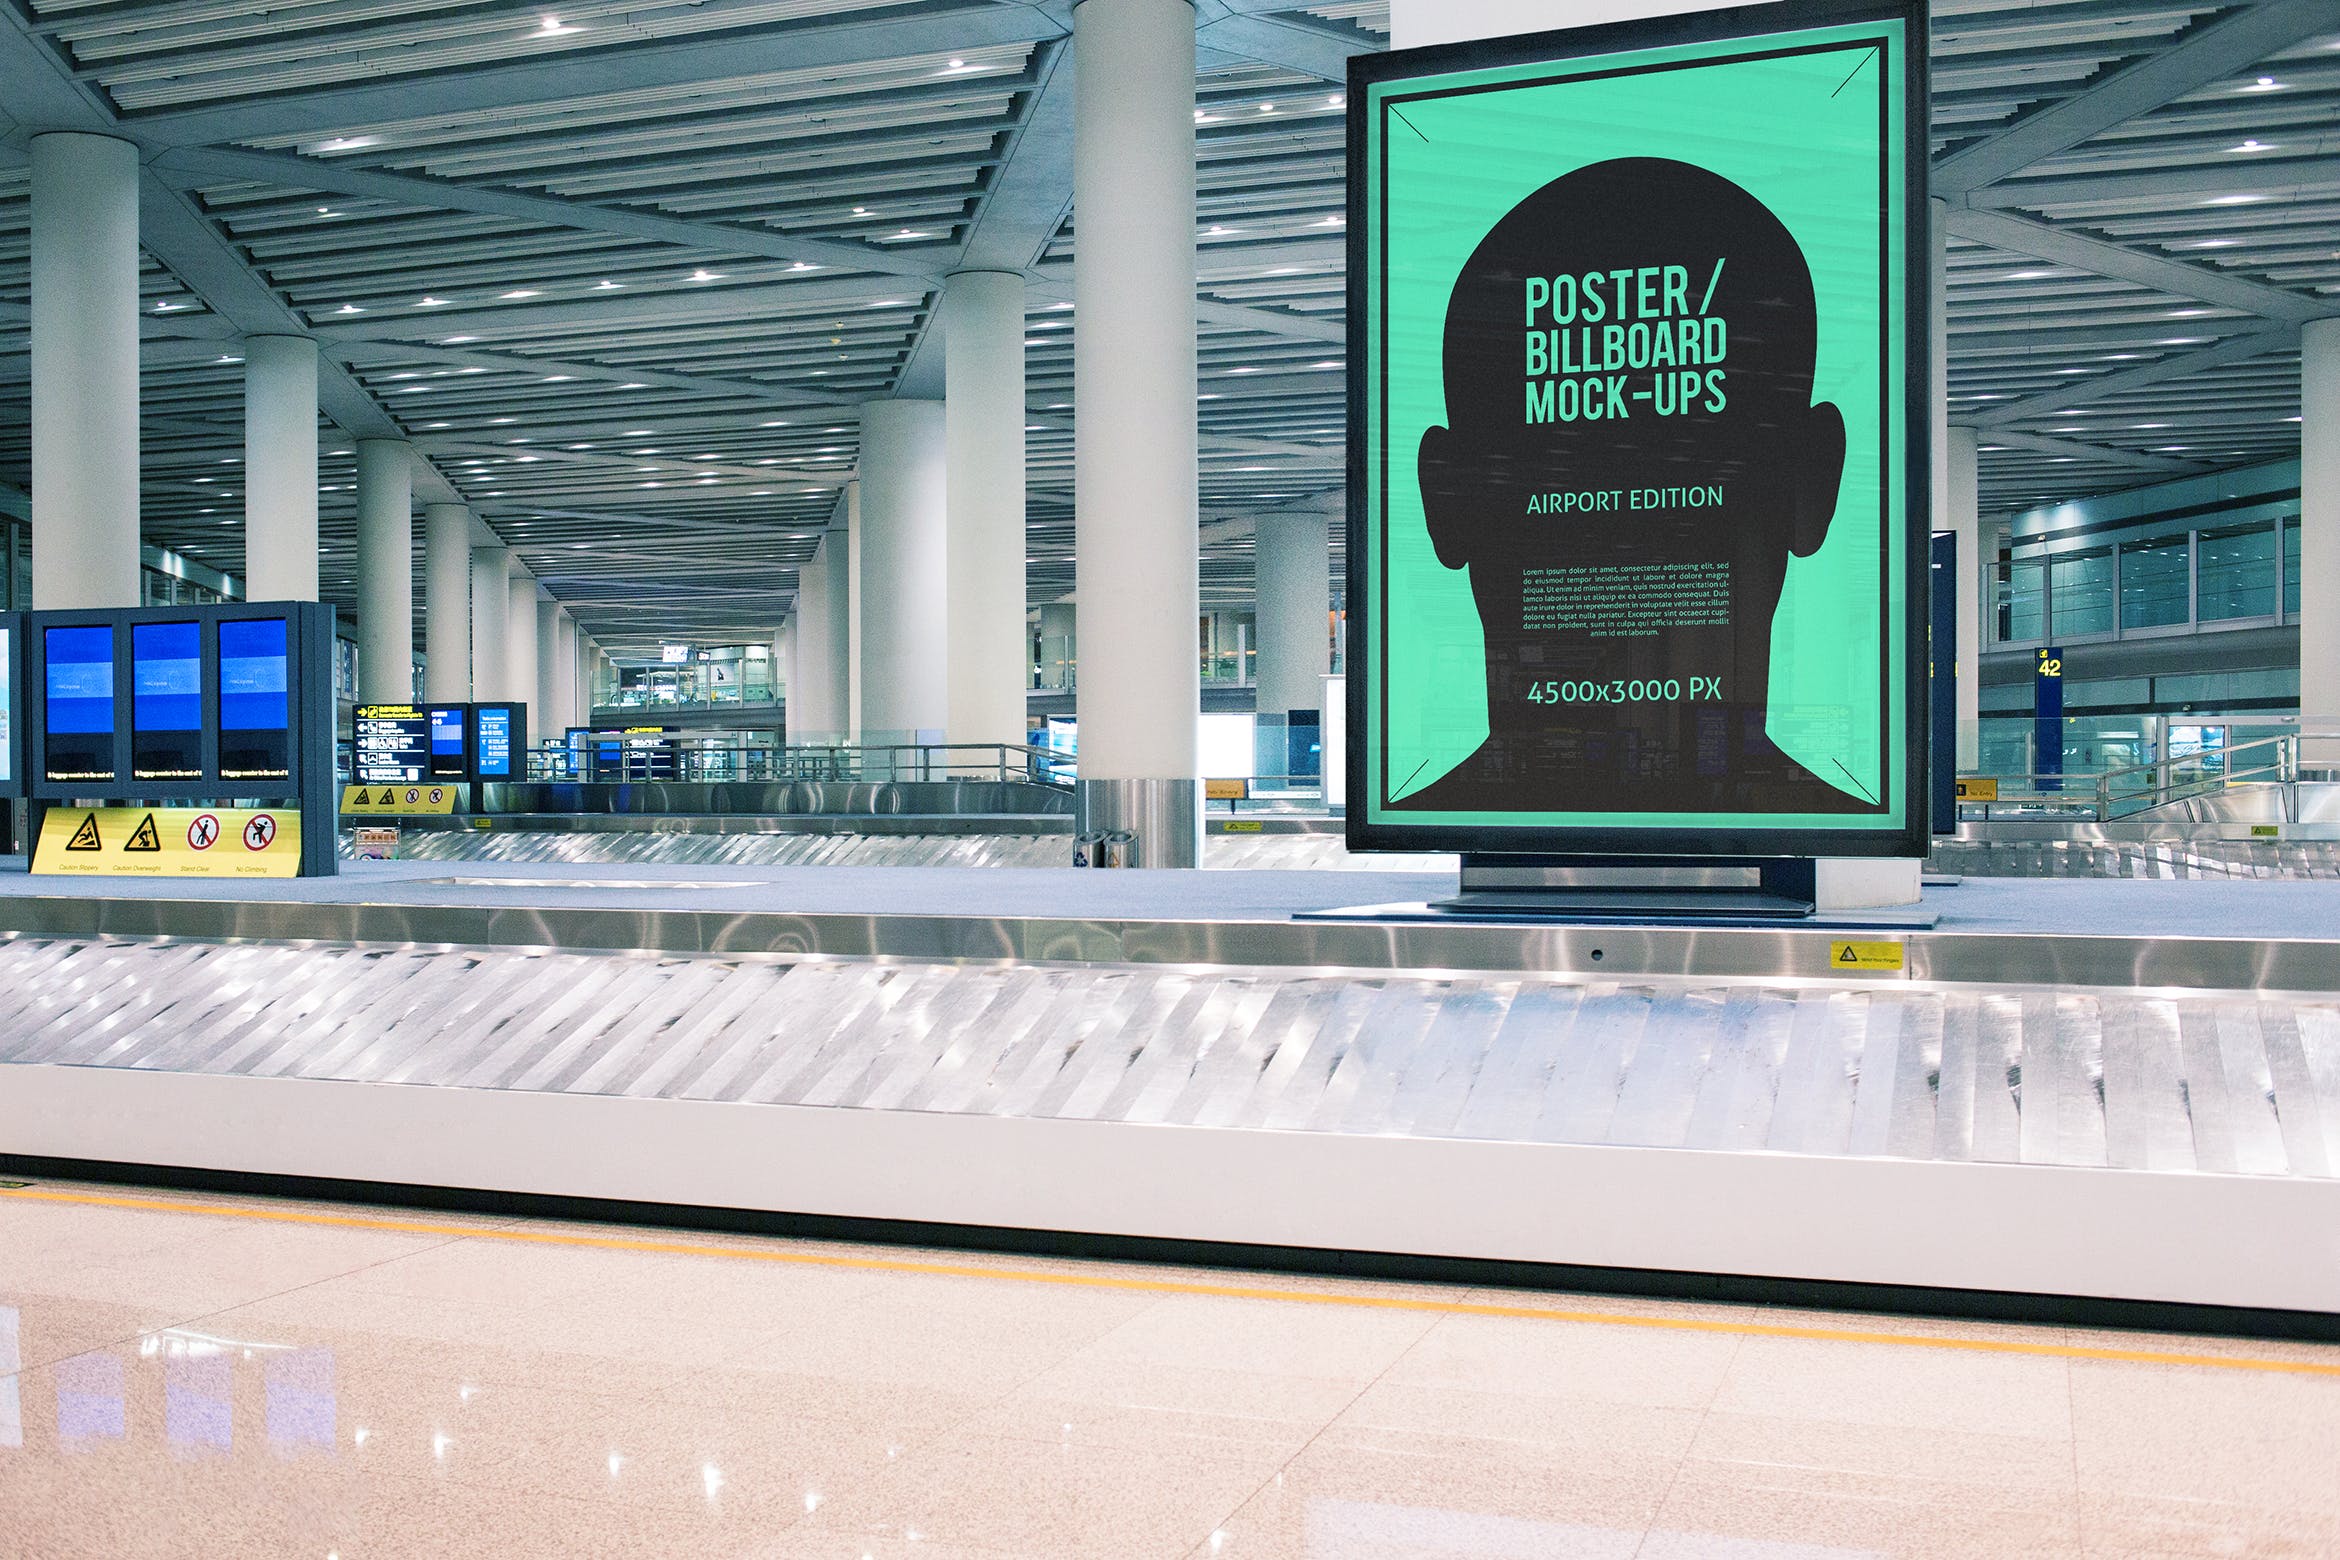 机场候机室海报/广告牌样机16设计网精选模板#8 Poster / Billboard Mock-ups – Airport Edition #8插图